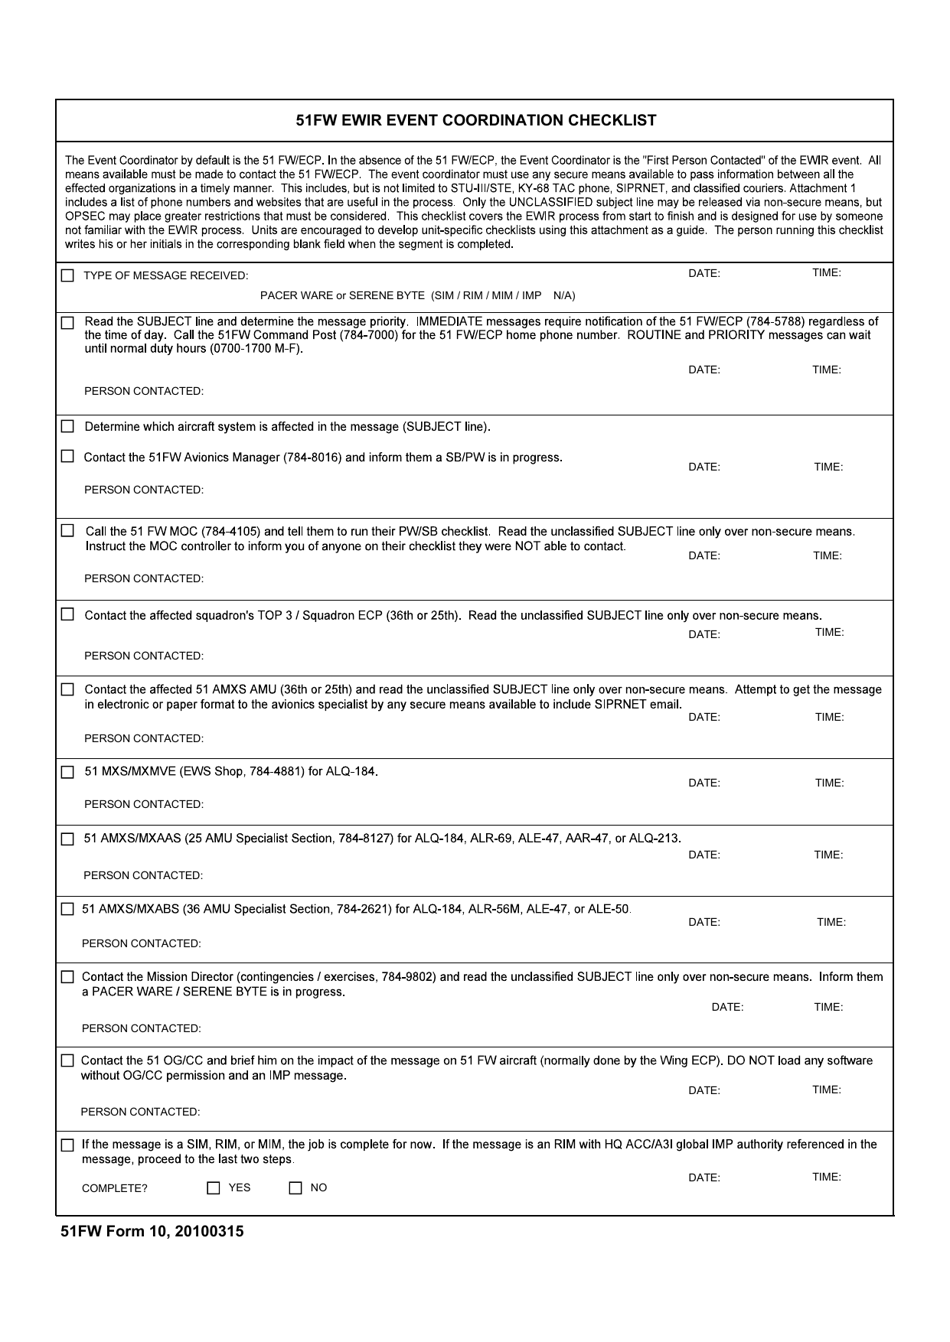 51 FW Form 10 51fw Ewir Event Coordination Checklist, Page 1